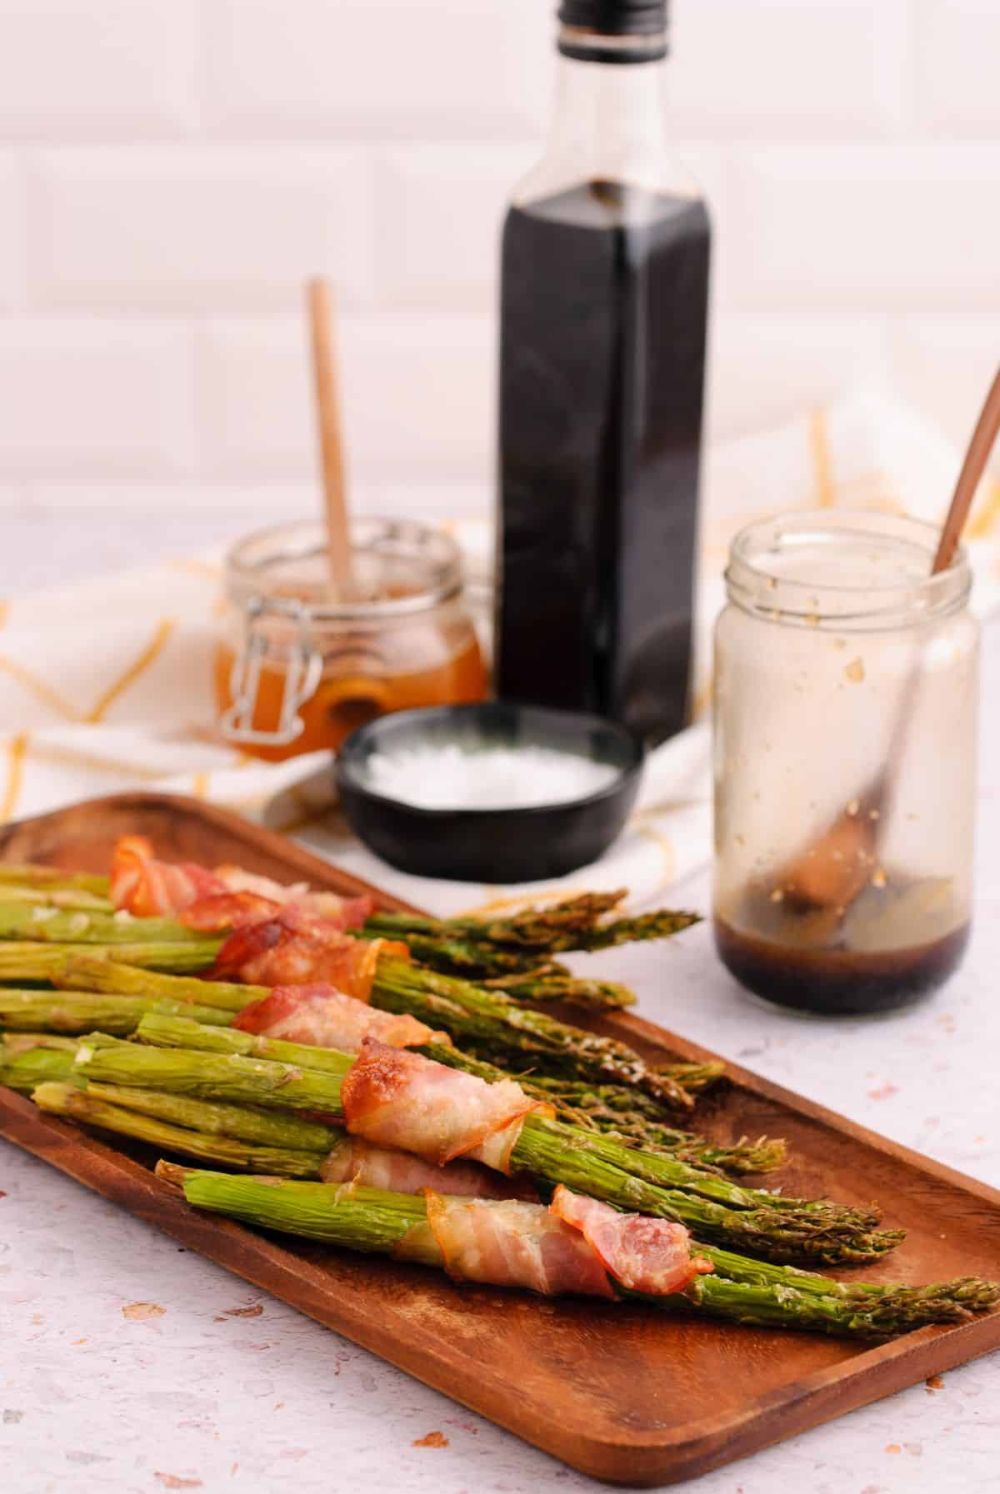 Bacon-Wrapped Asparagus Recipe